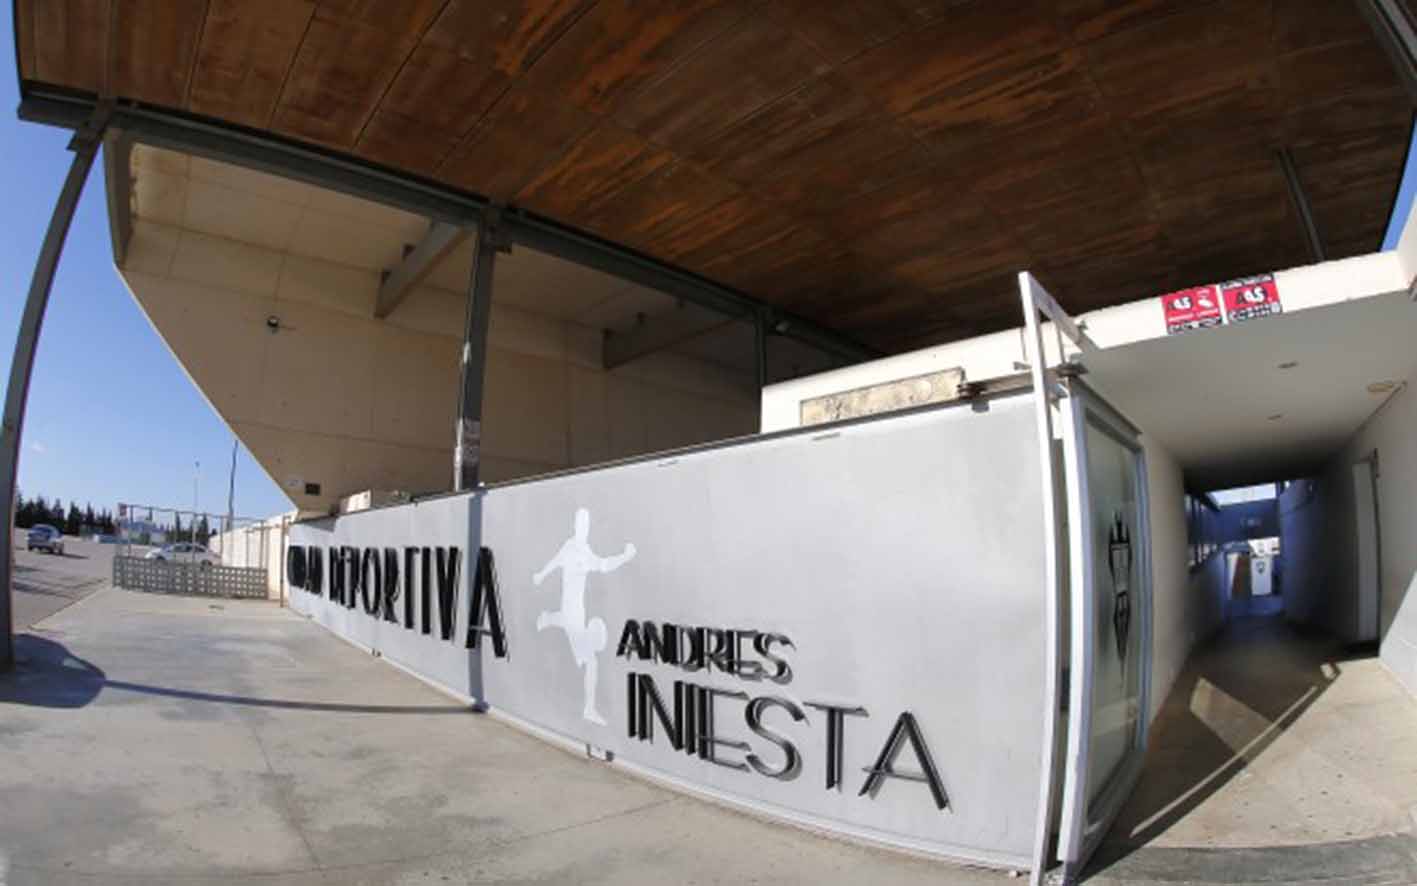 La Covid-19 obliga a cerrar la ciudad Deportiva "Andrés Iniesta".